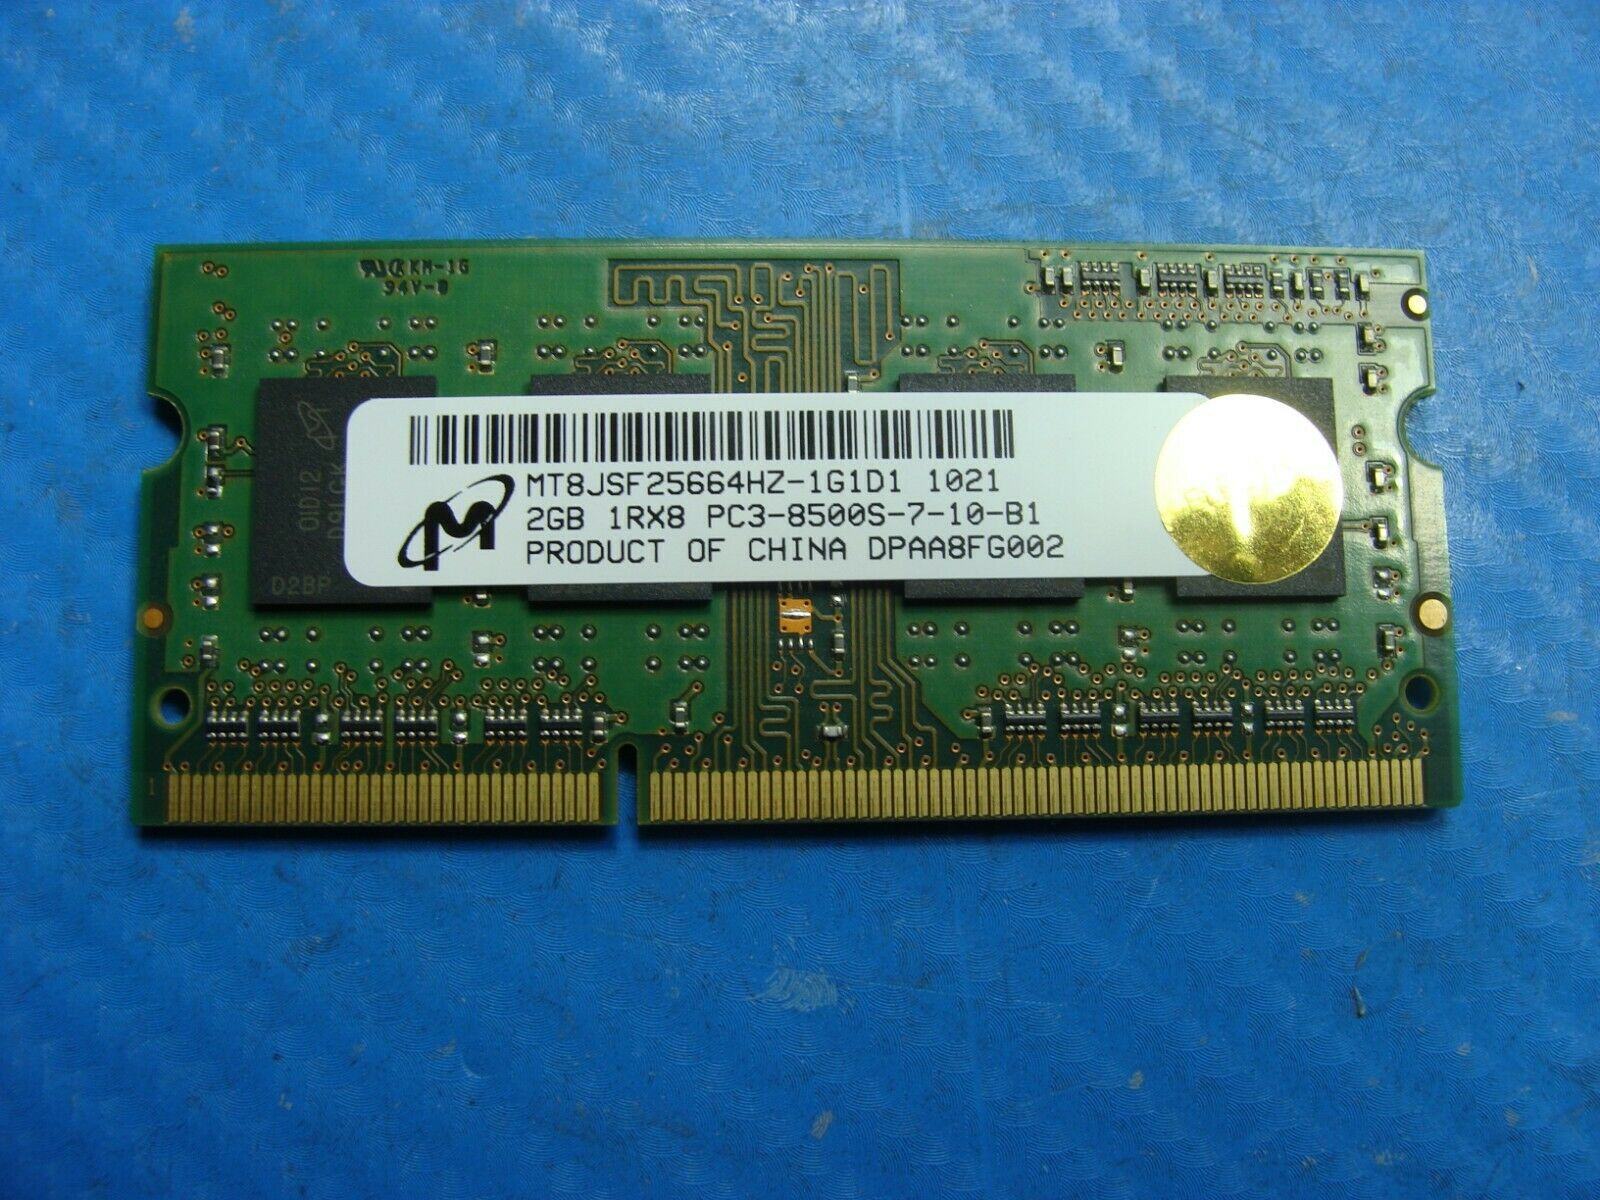 MacBook A1278 Laptop Micron 2GB Memory PC3-8500S-7-10-B1 MT8JSF25664HZ-1G1D1 #1 - Laptop Parts - Buy Authentic Computer Parts - Top Seller Ebay